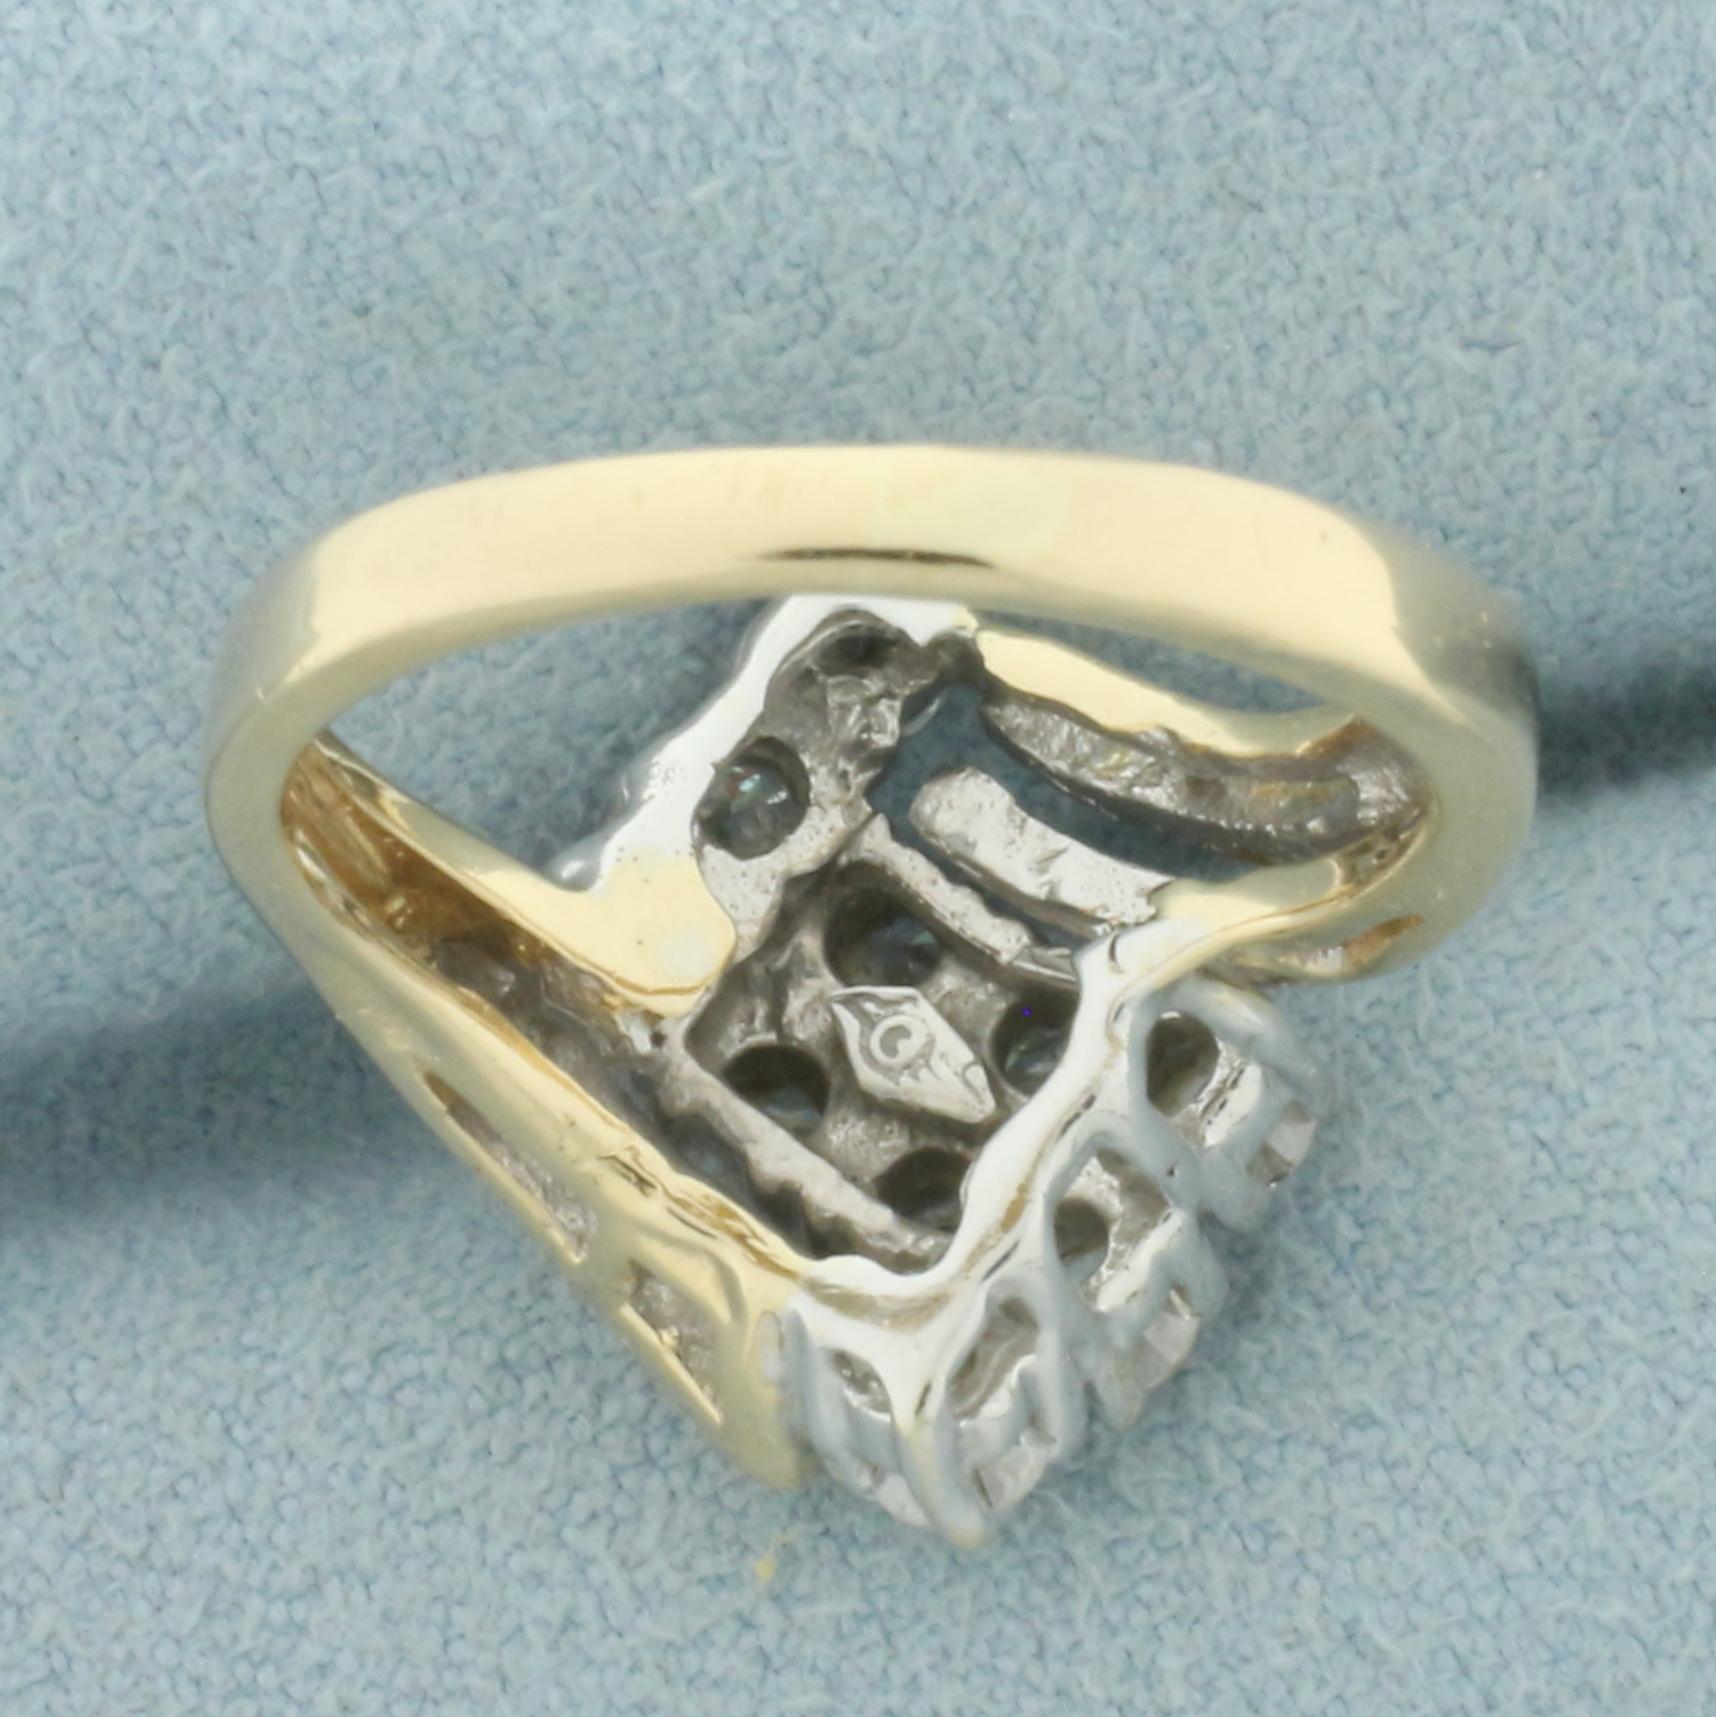 Zigzag Design Diamond Ring In 14k Yellow Gold